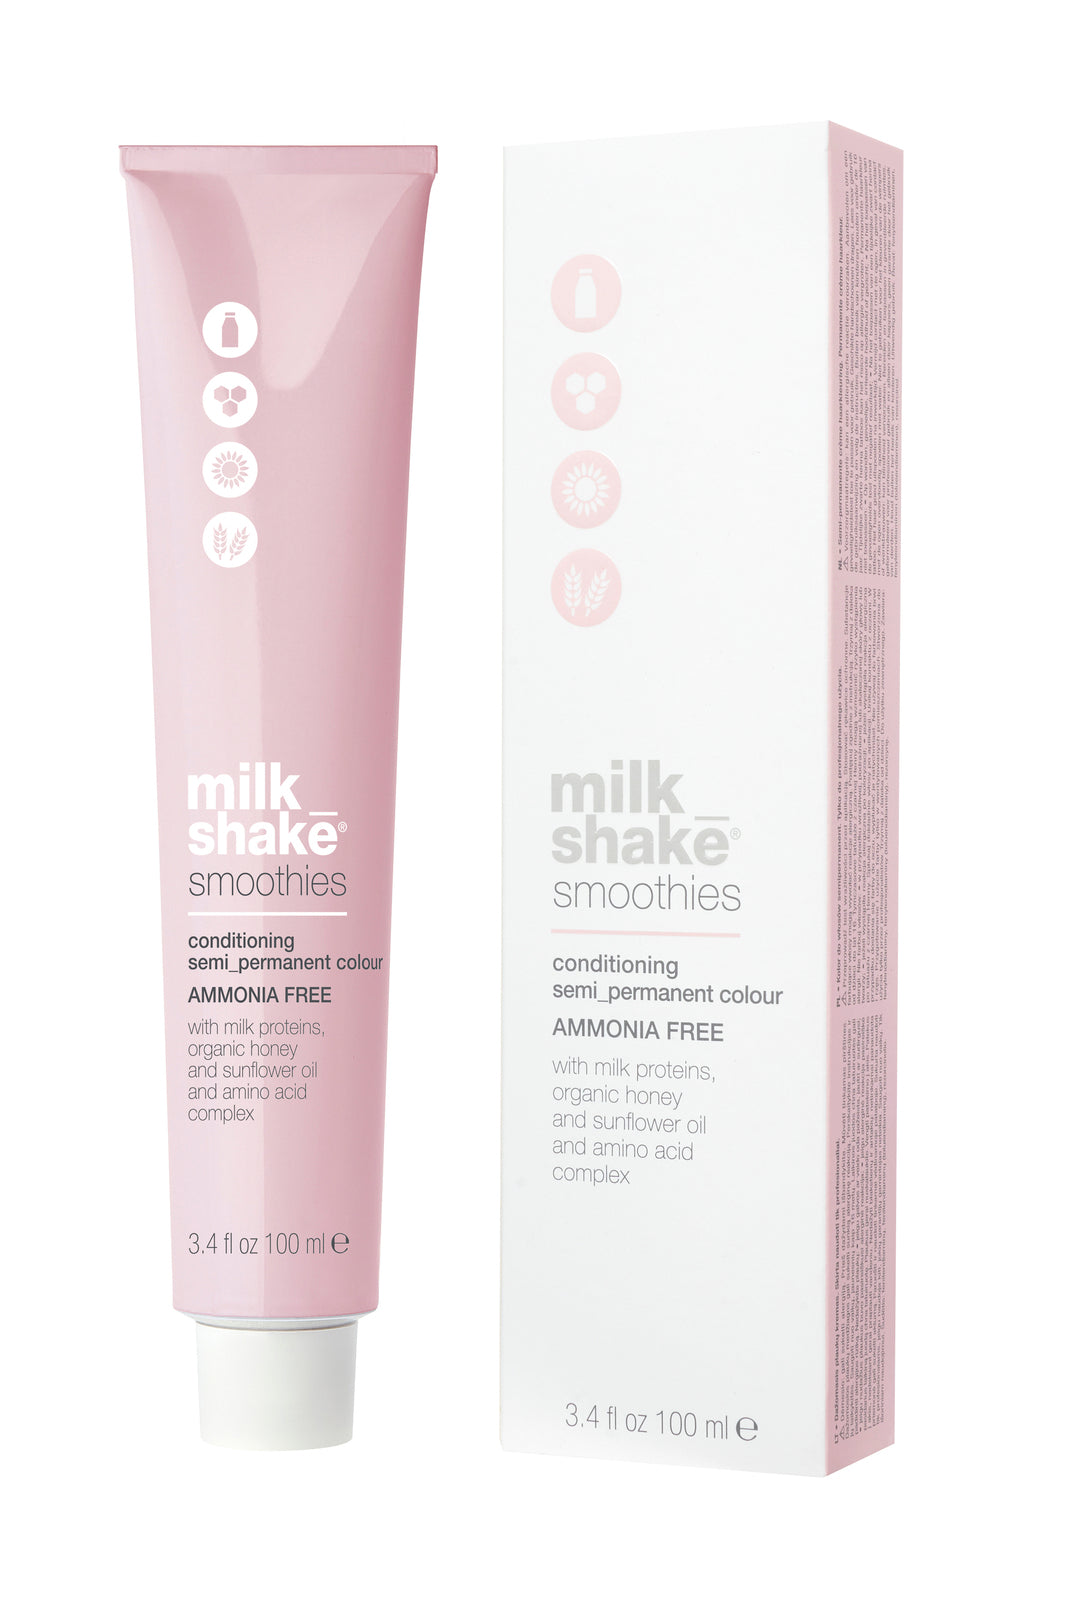 Milkshake smoothies semi-permanent color 9.13